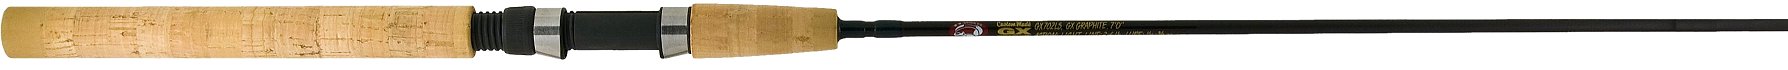 GX409-1    7'0"   2-6 lb   2 pc   W.W. Grigg GX Panfish Rod